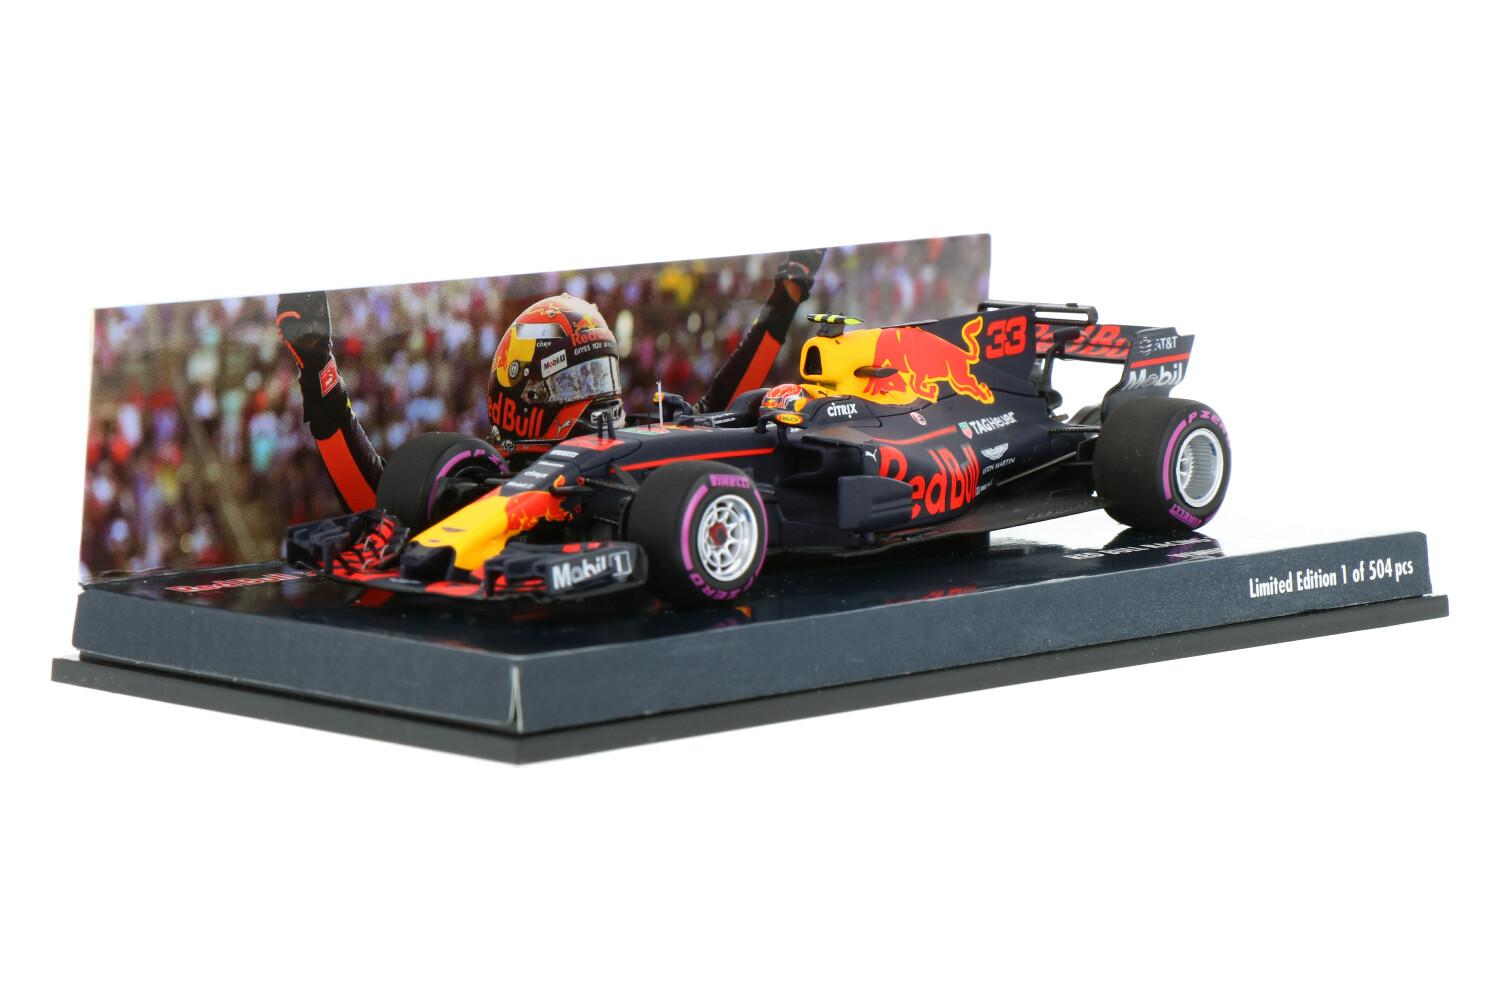 Red Bull Racing RB13 - Modelauto schaal 1:43